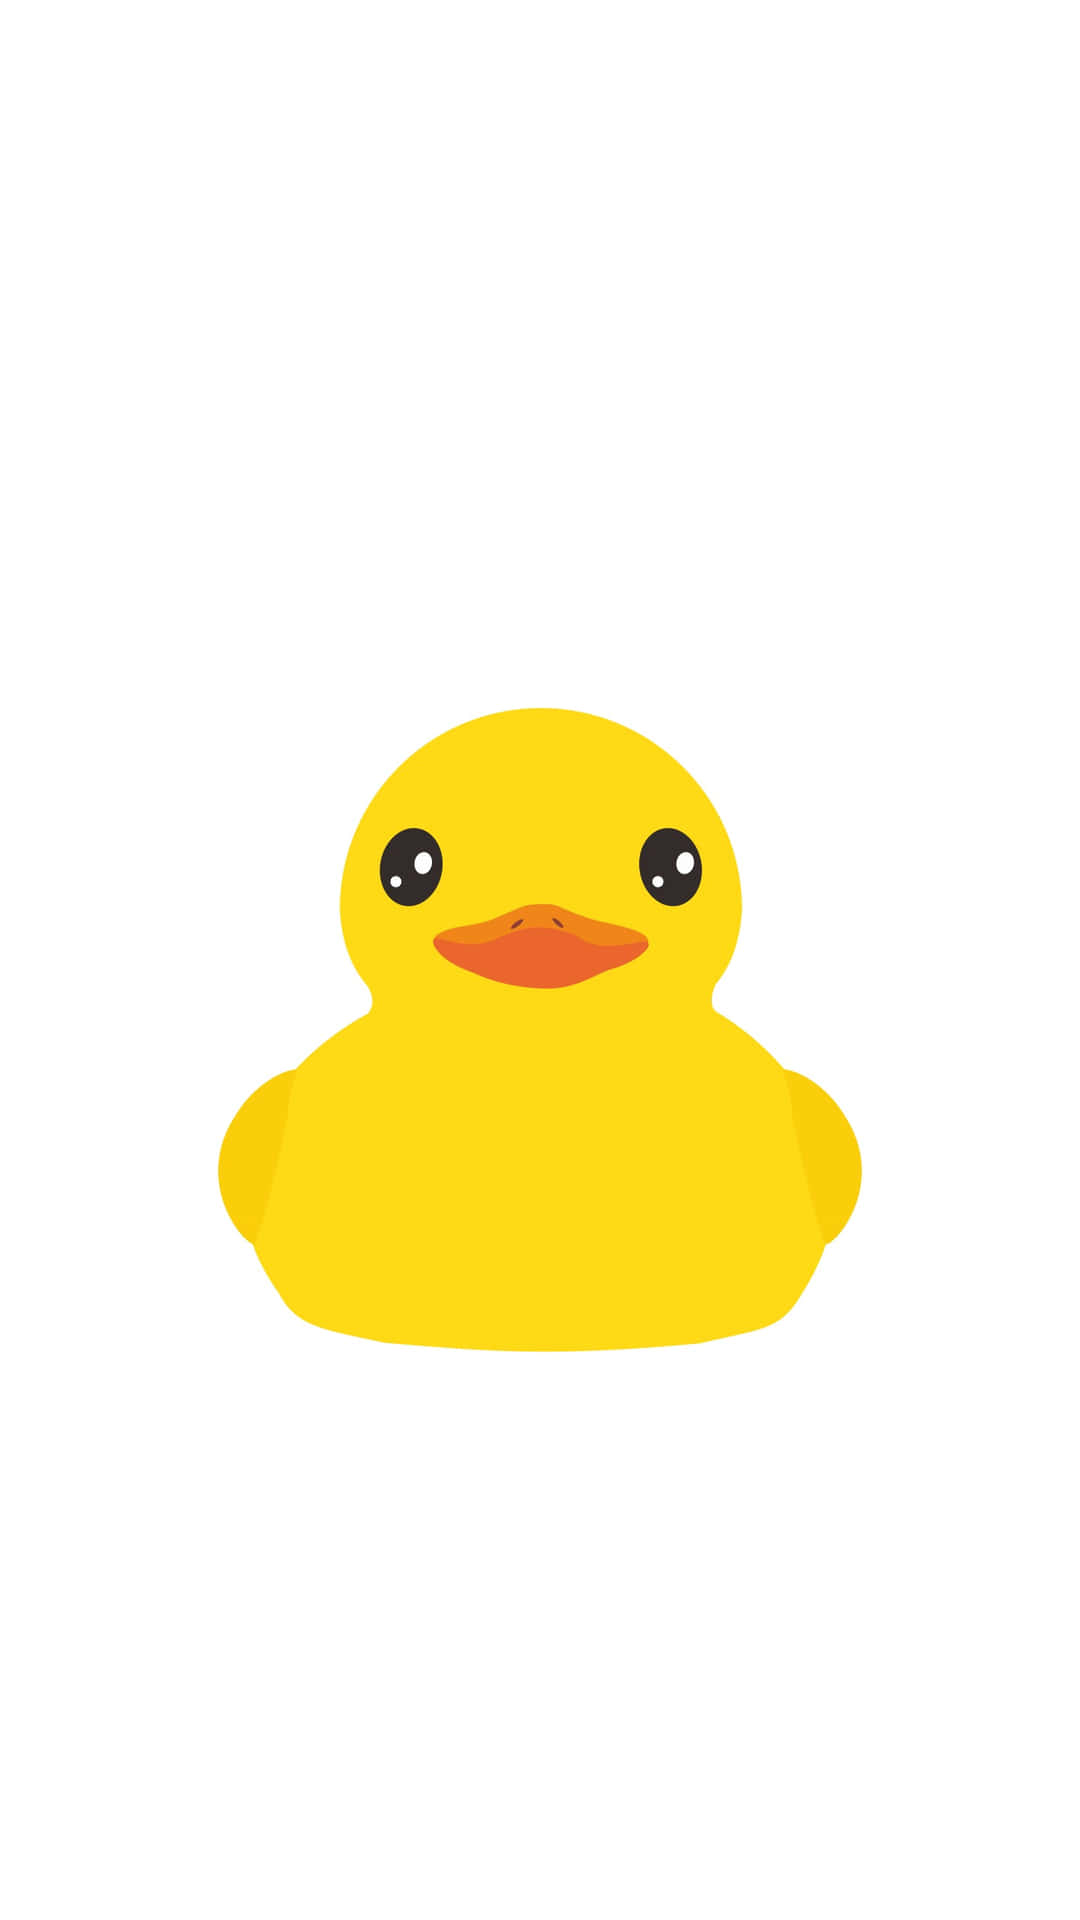 Yellow Rubber Duck Illustration.jpg Wallpaper